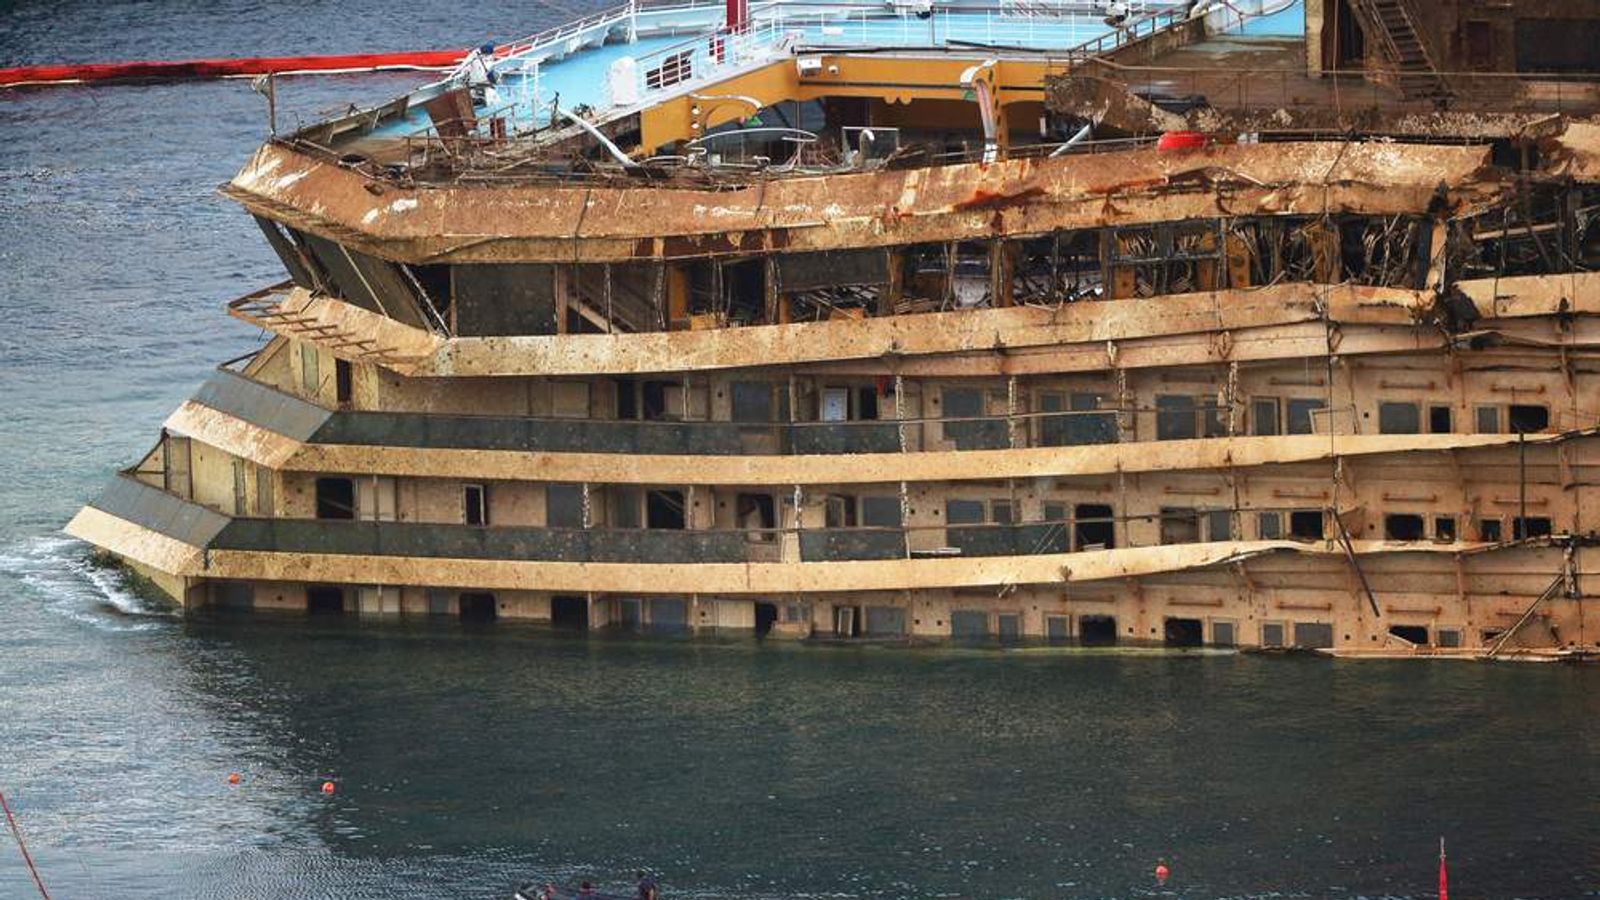 what cruise ship sank